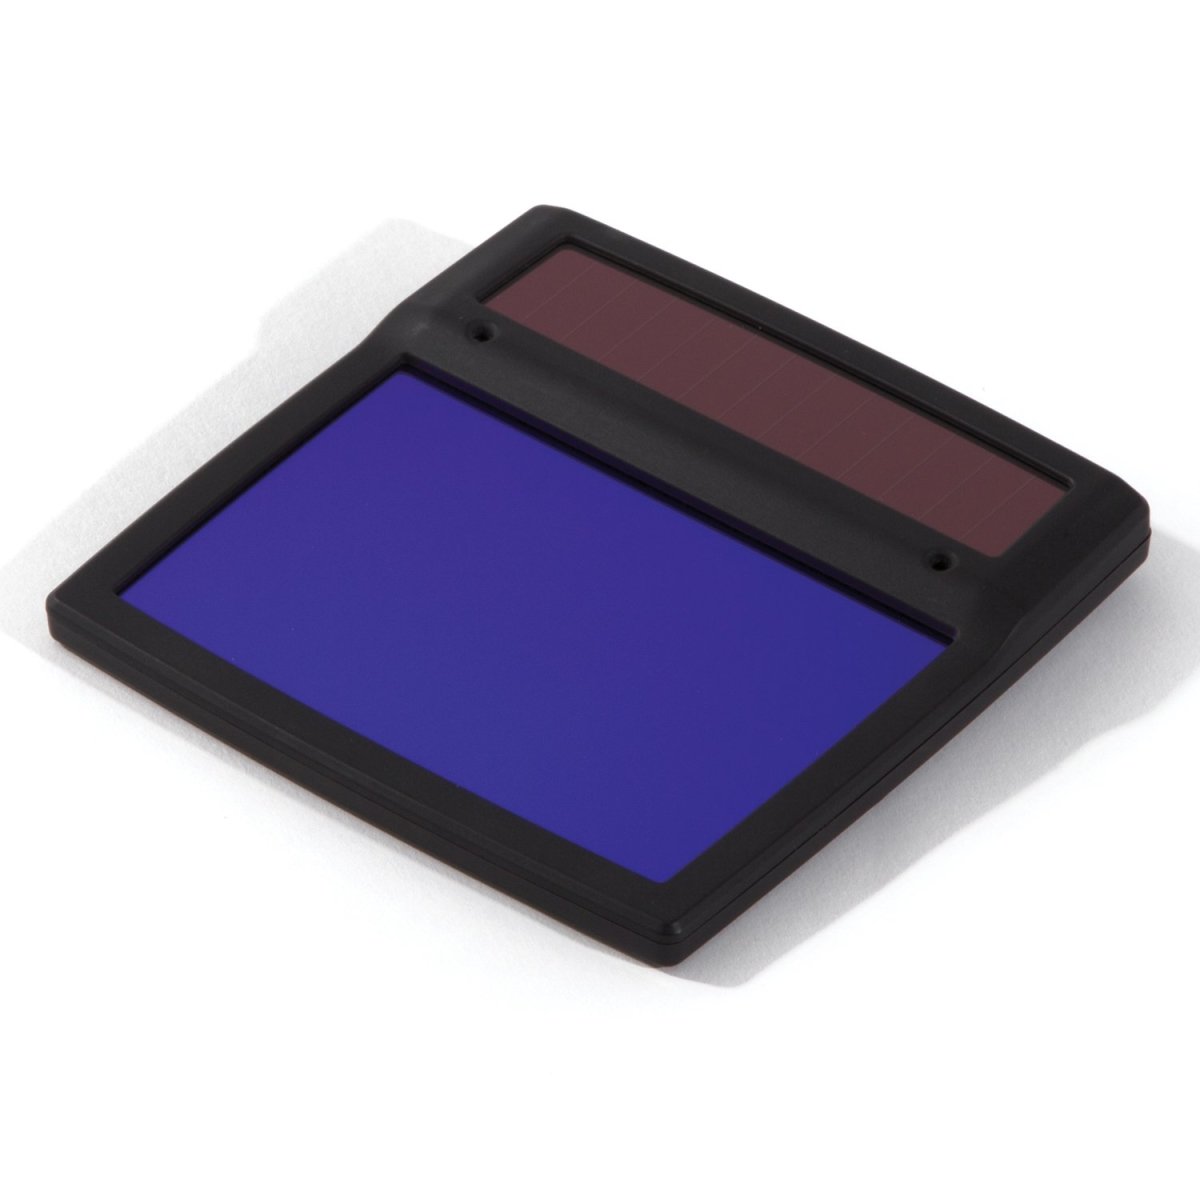 RPB Auto Darkening Filter (ADF) Lens for Z-Link, Z4 Respirators